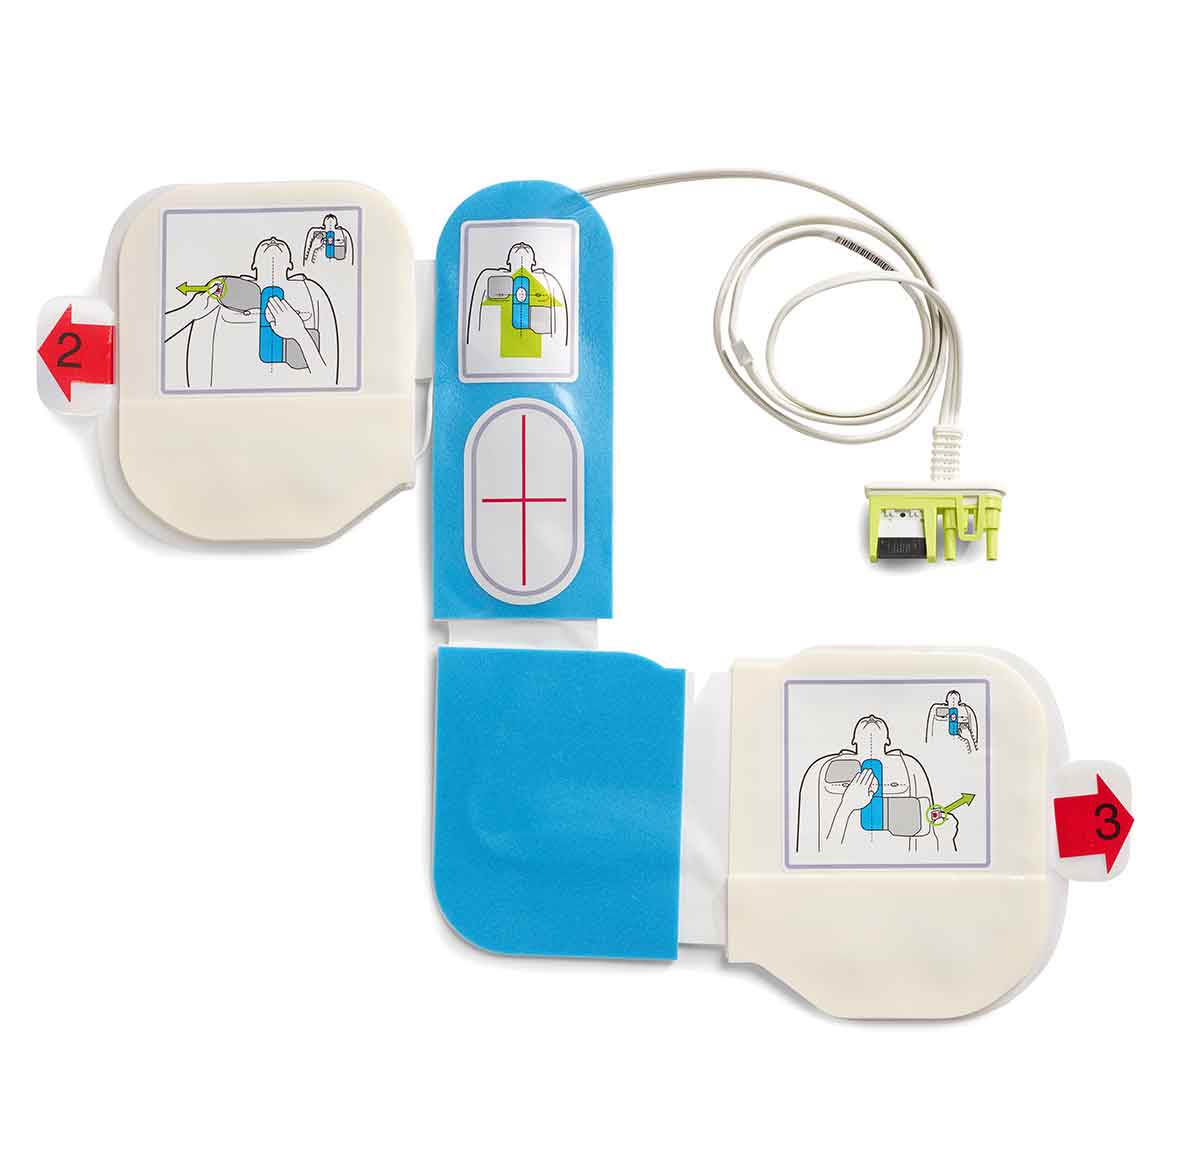 AED and Defibrillator Accessories